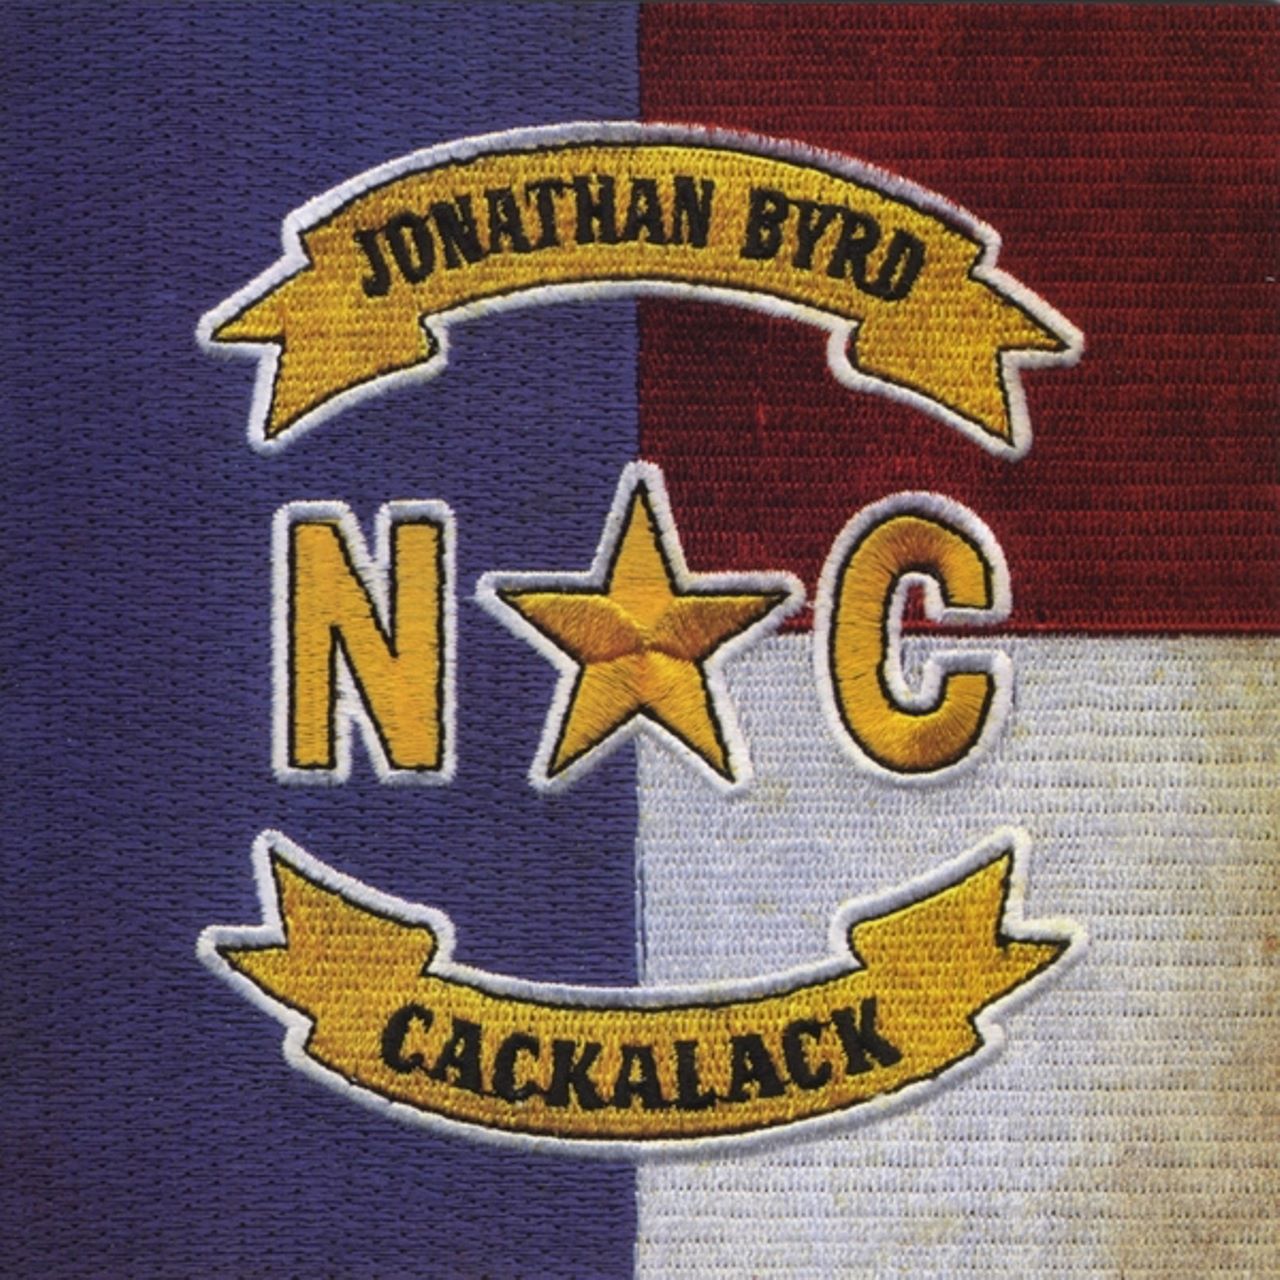 Jonathan Byrd - Cackalack cover album